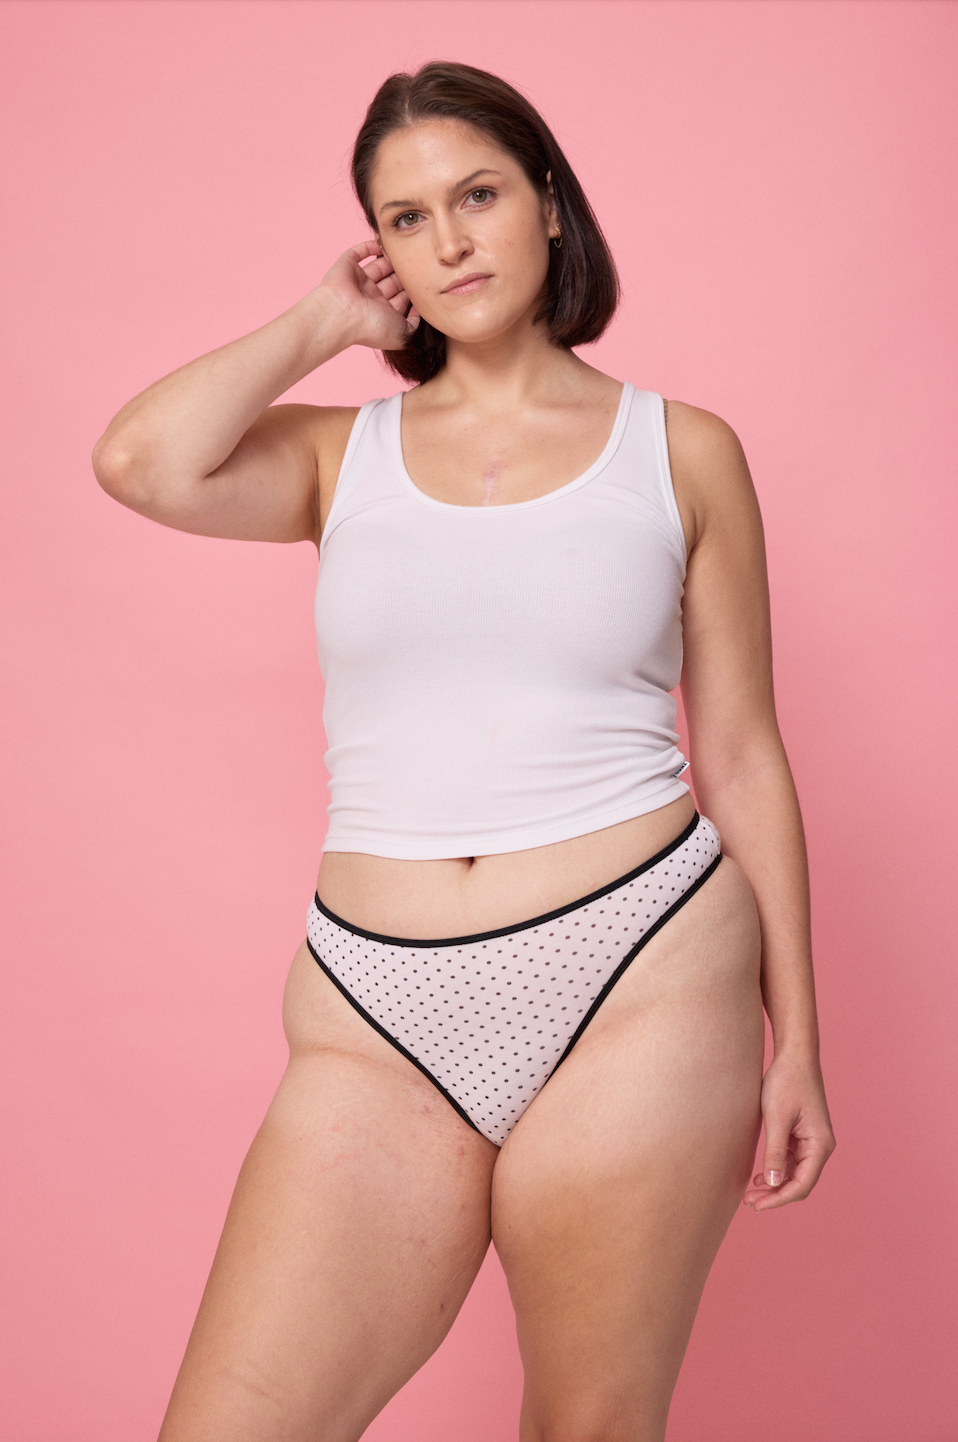 What's the Pocket in Women's Underwear For? – Cherri